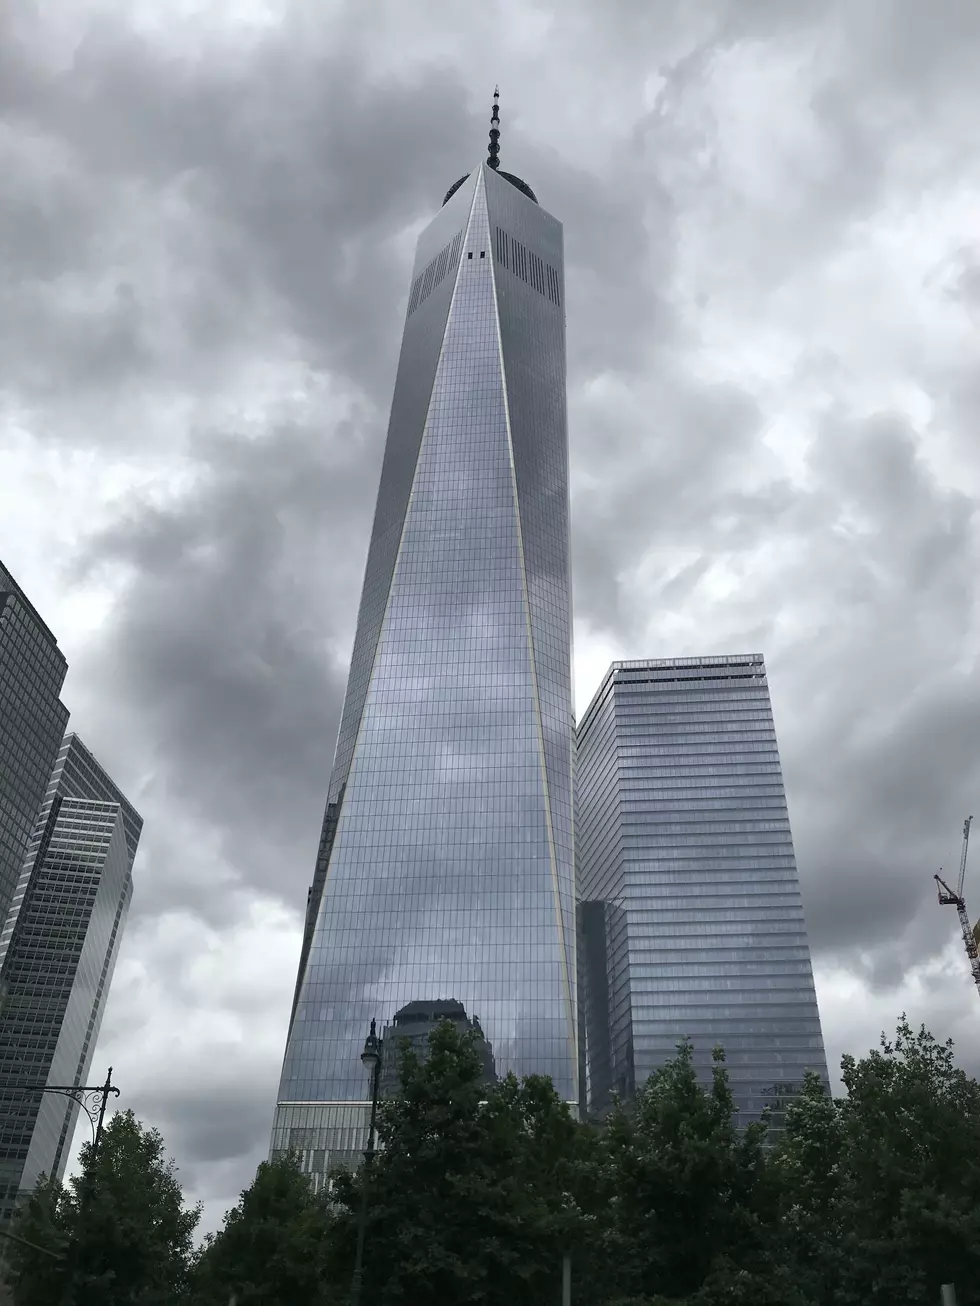 911 Memorial In New York Is Something Everyone Should See